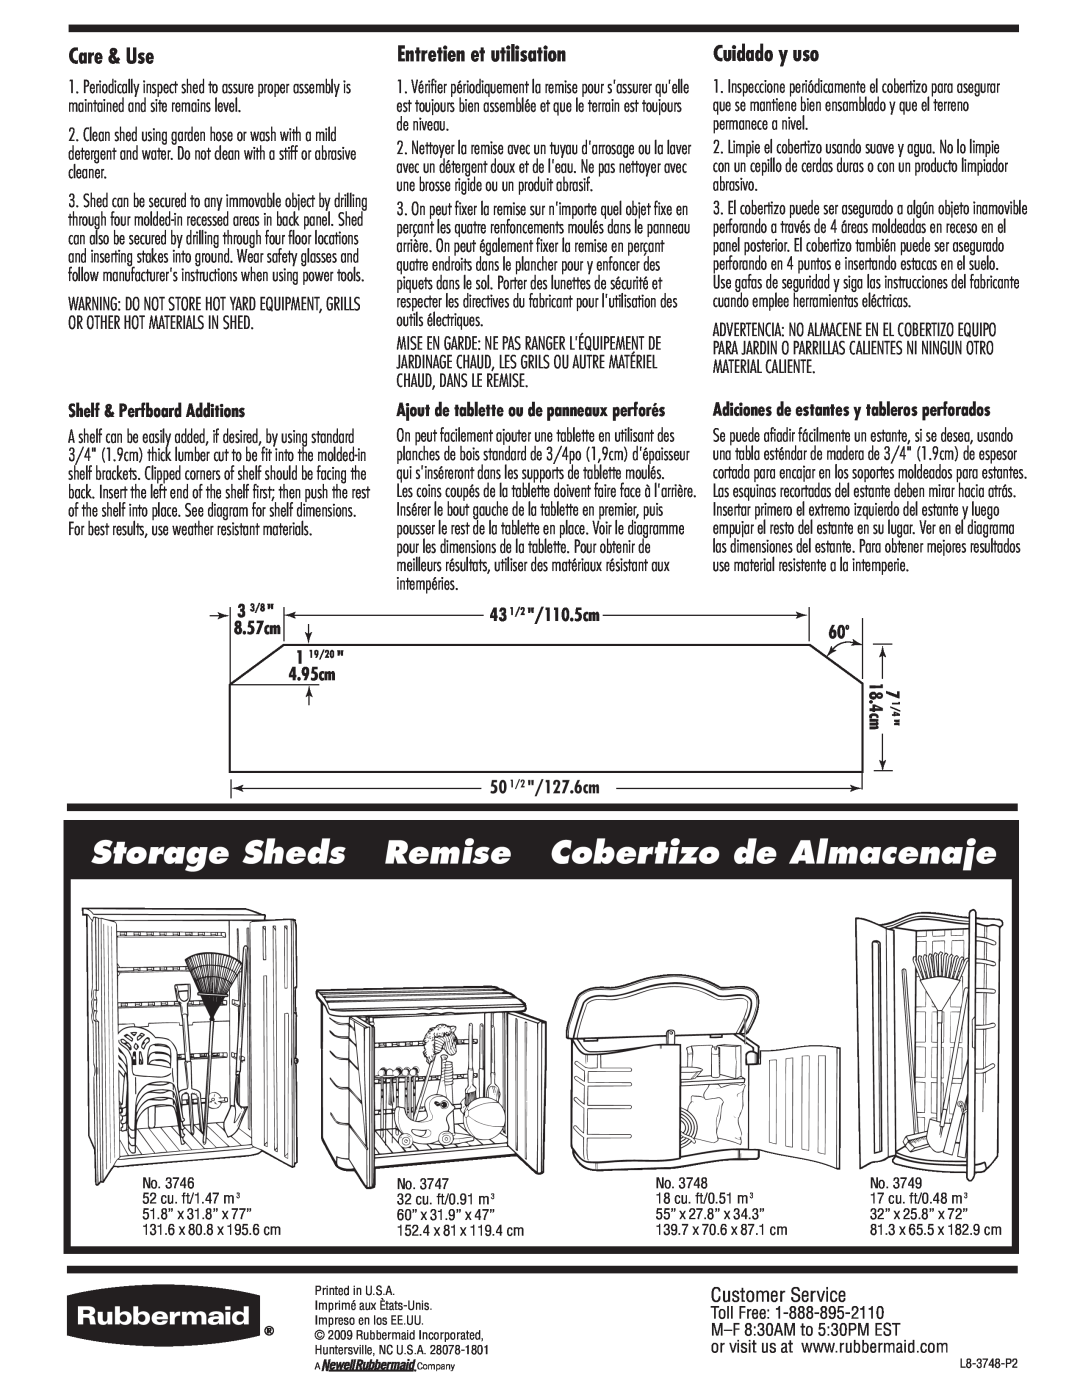 Rubbermaid 3746 manual Storage Sheds, Remise, Cobertizo de Almacenaje, Care & Use, Entretien et utilisation, Cuidado y uso 